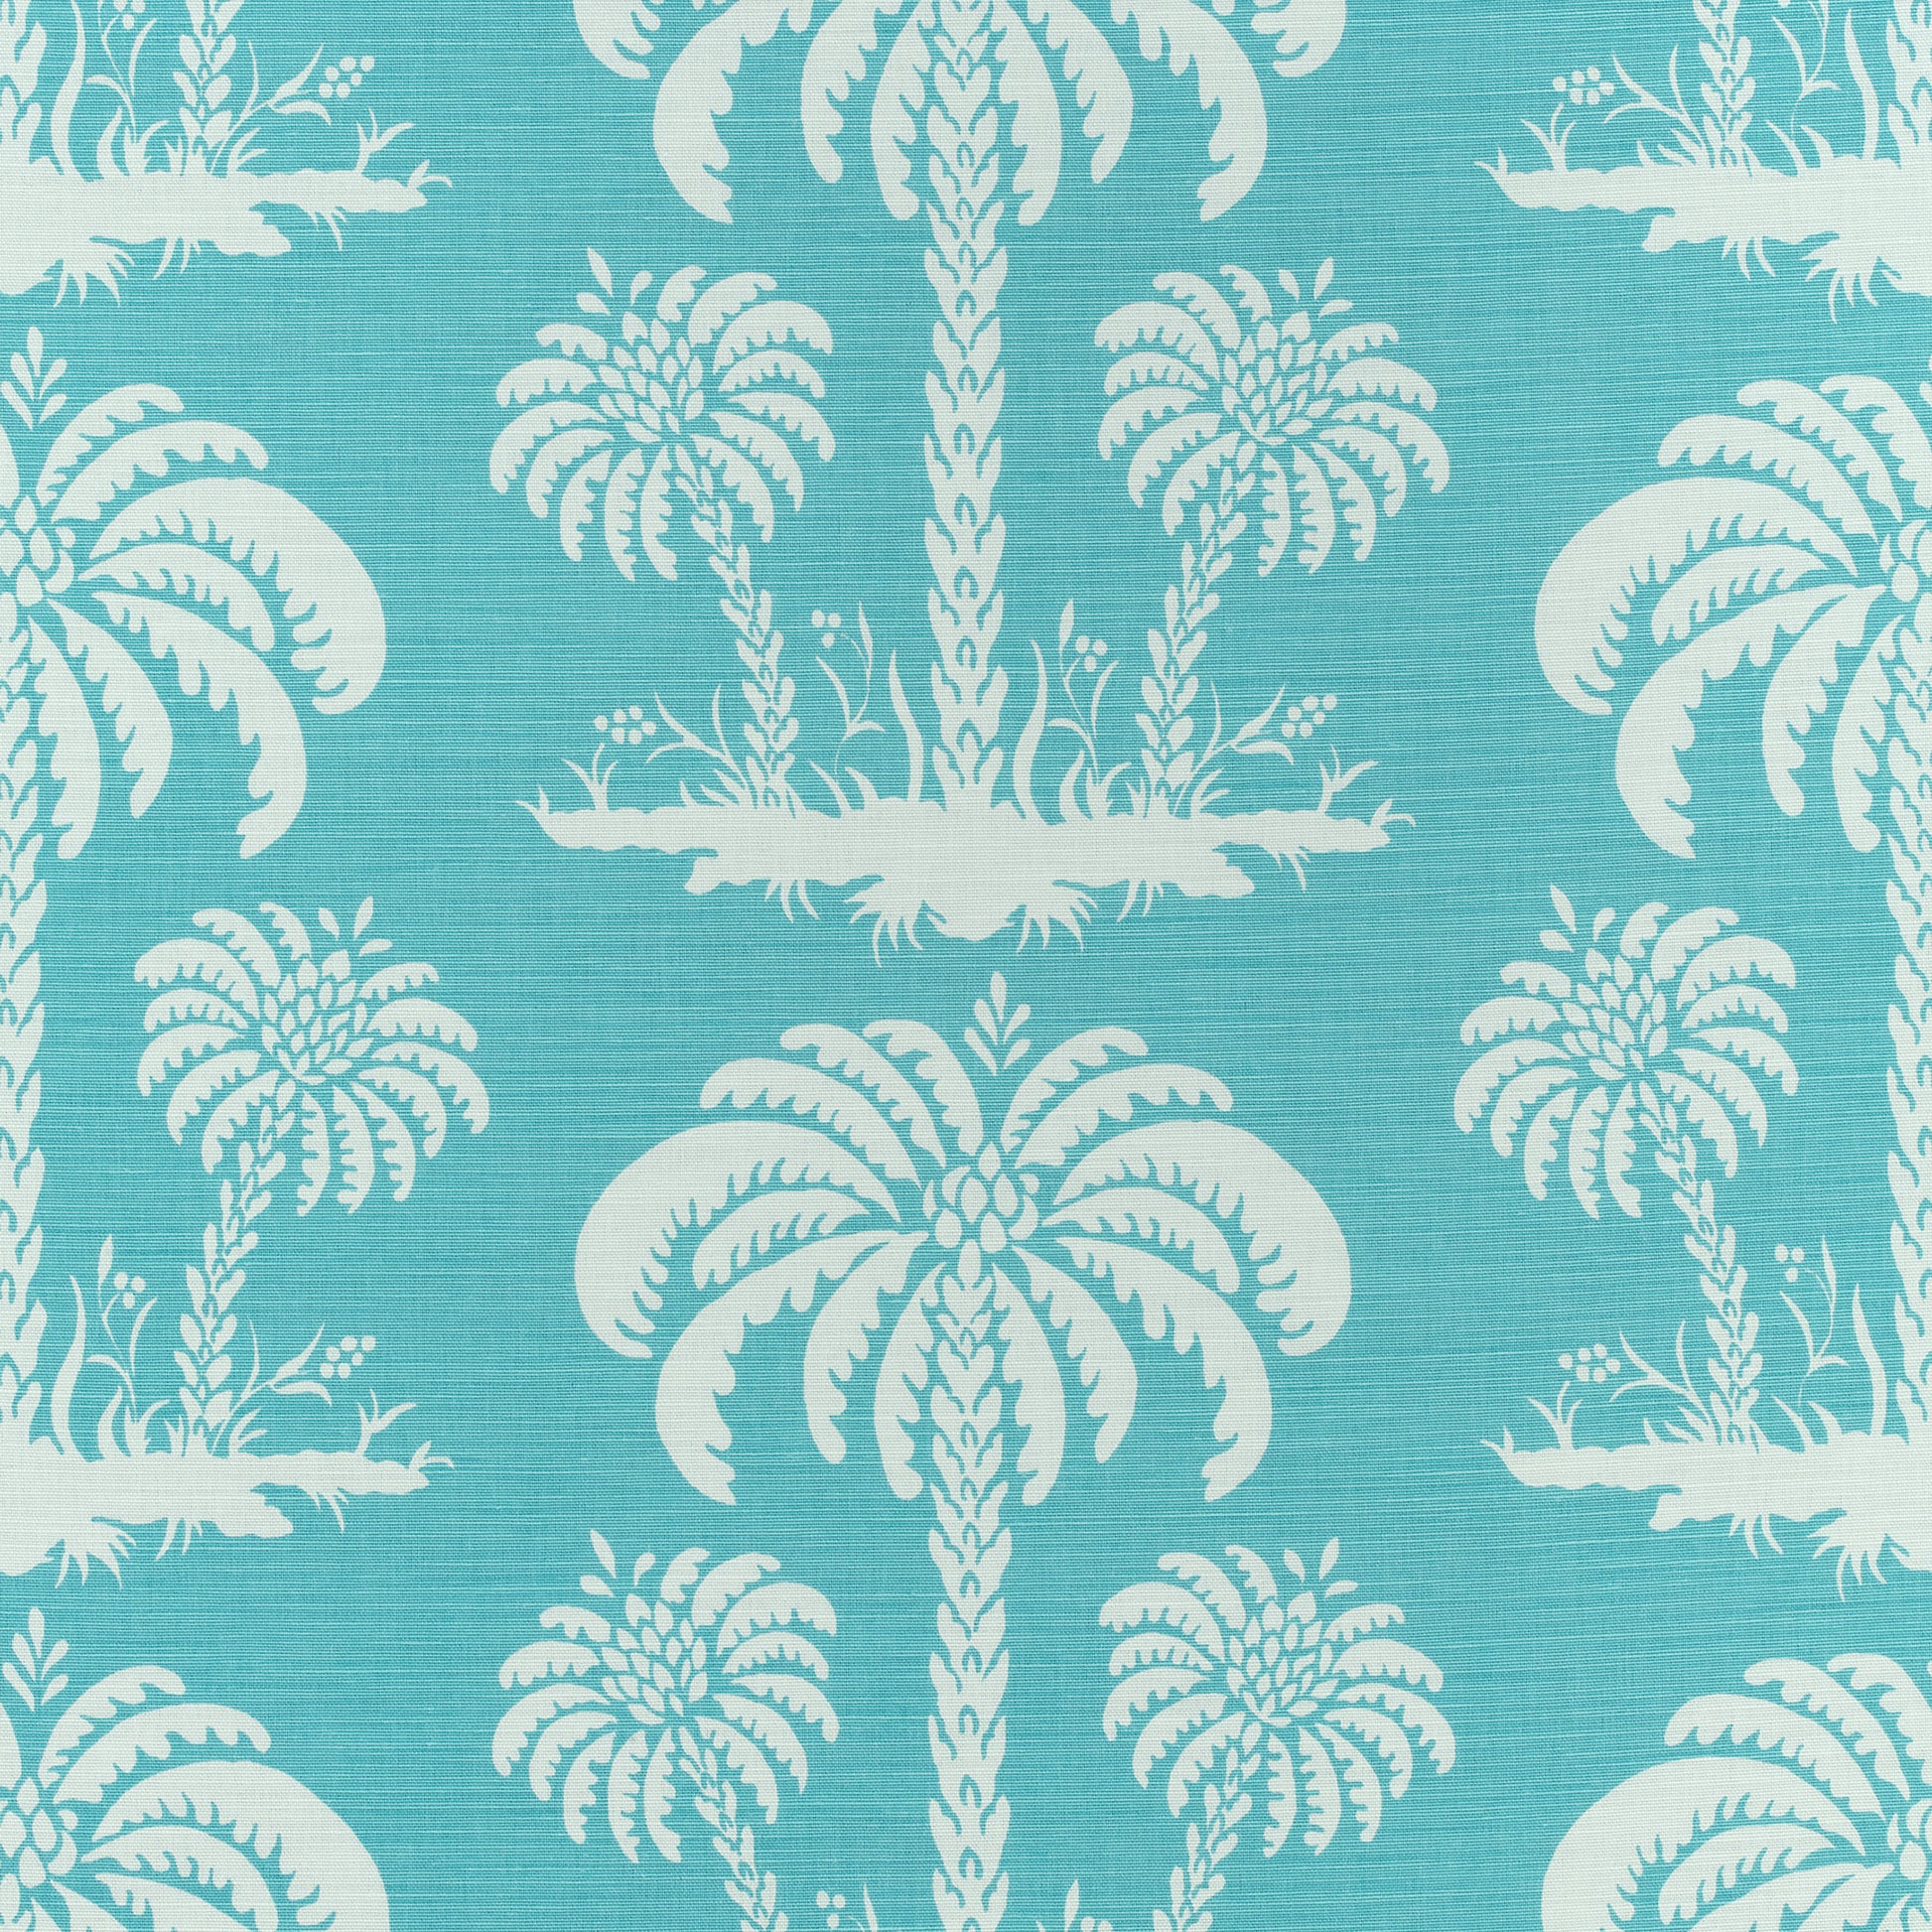 Buy samples of F913146 Palm Island Printed Summer House Thibaut Fabrics